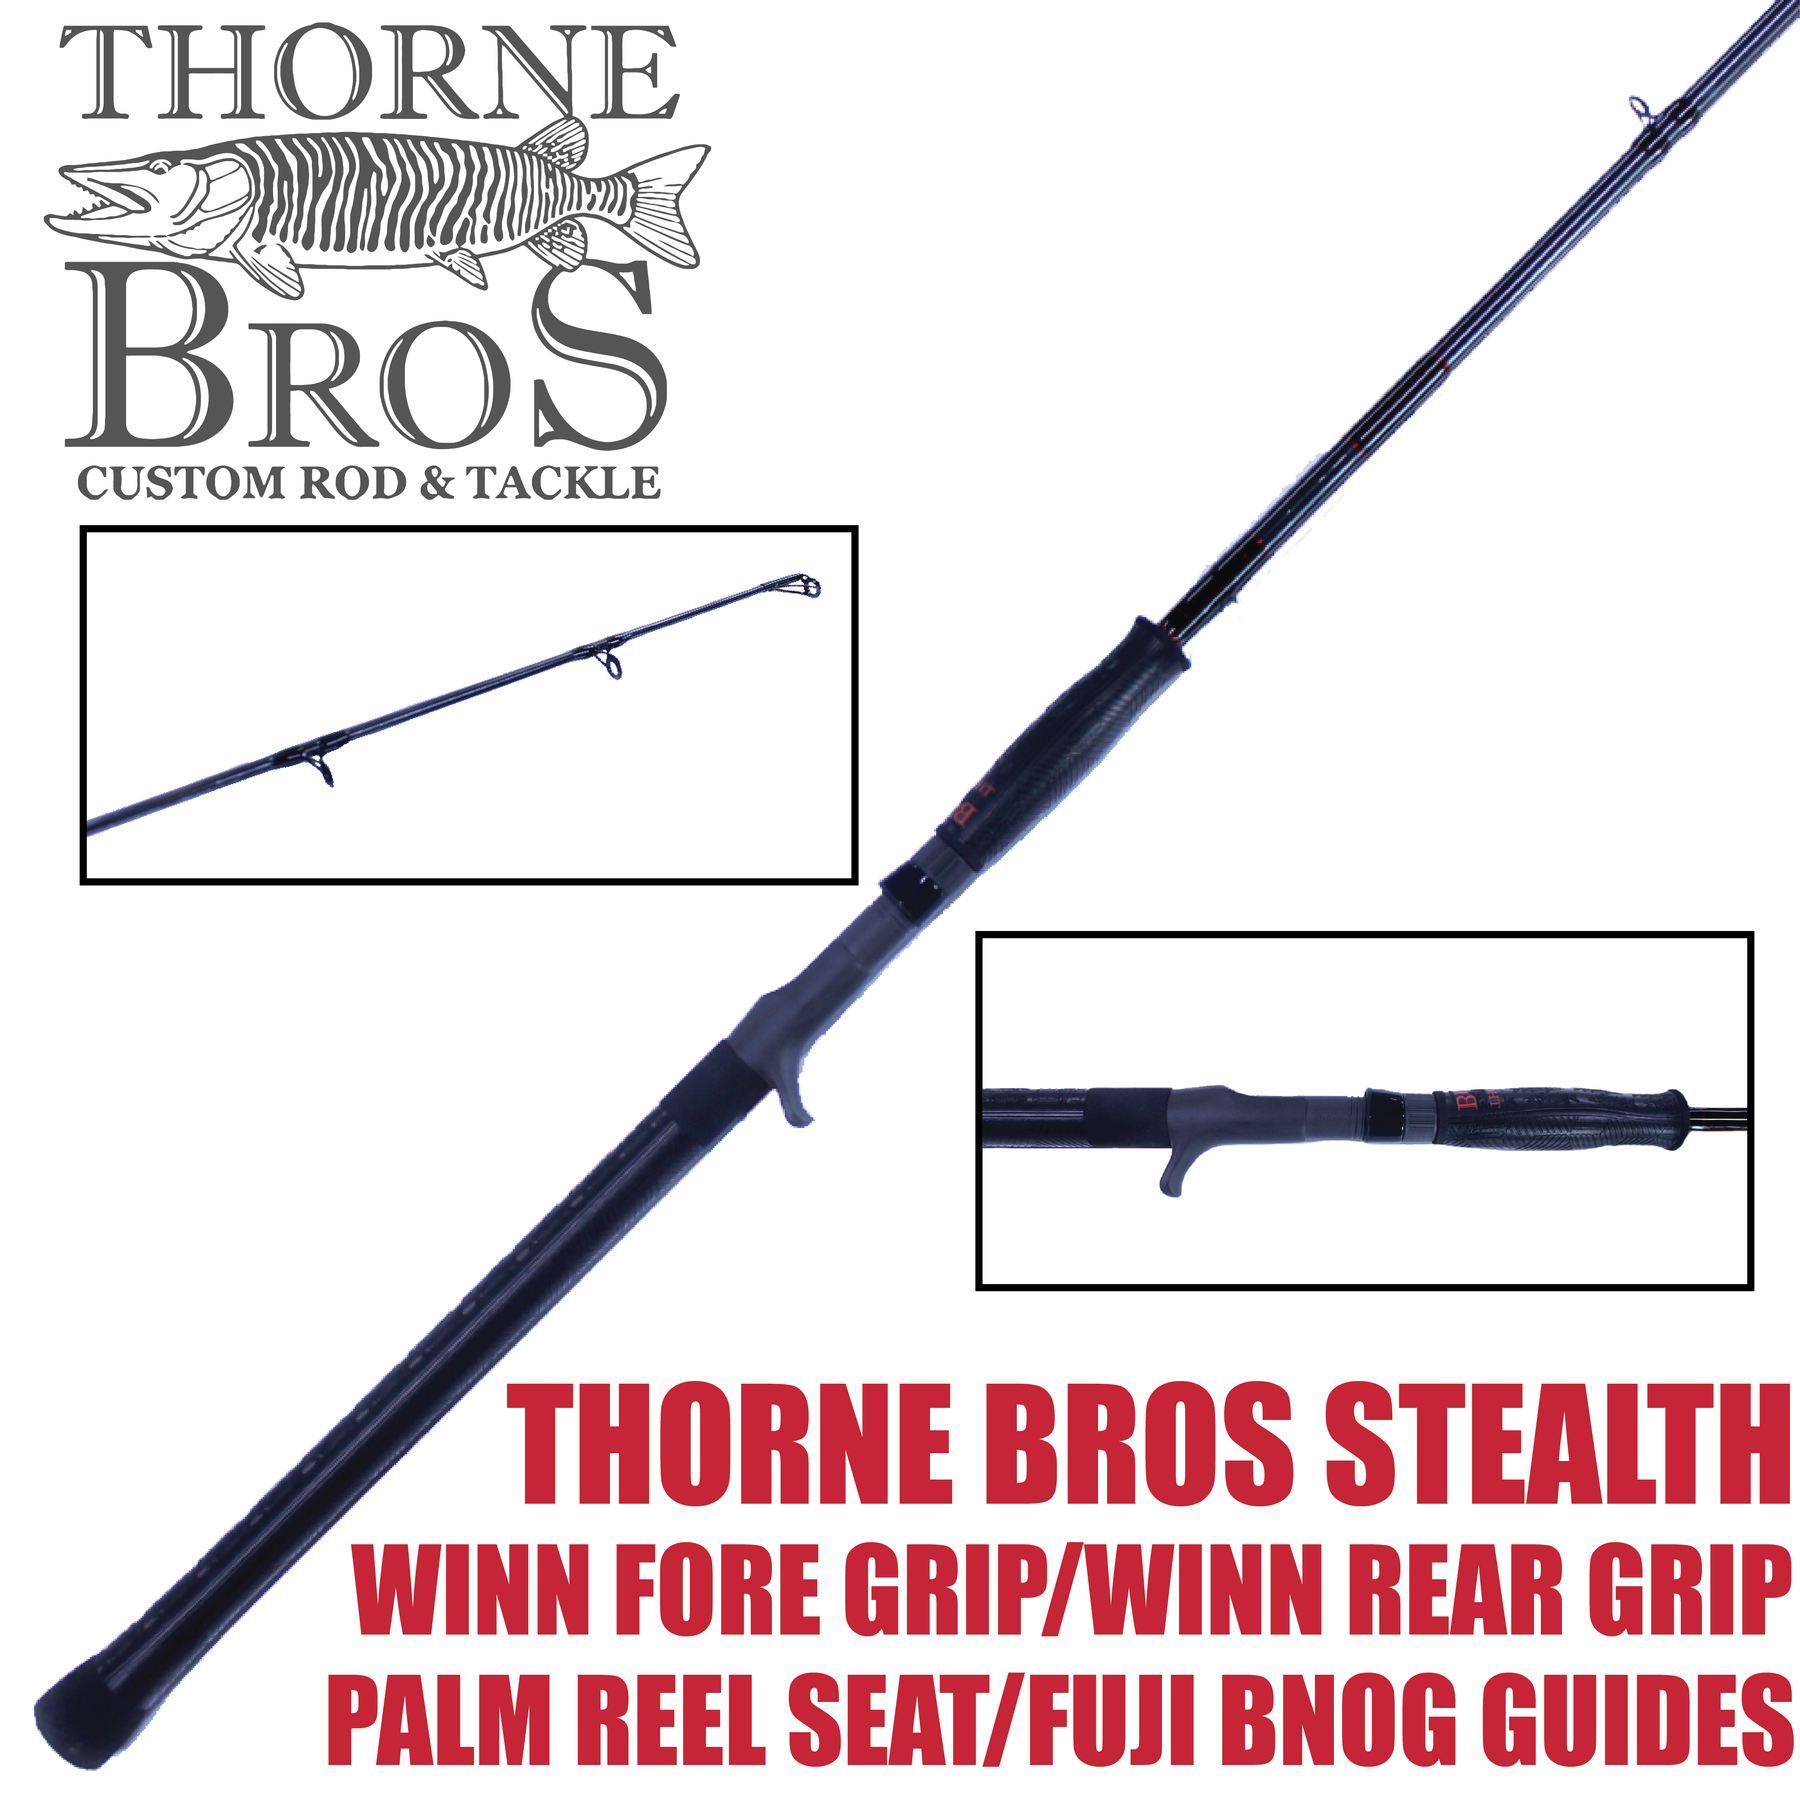 Thorne Bros Stealth Saltwater Jig/Swimbait Rod